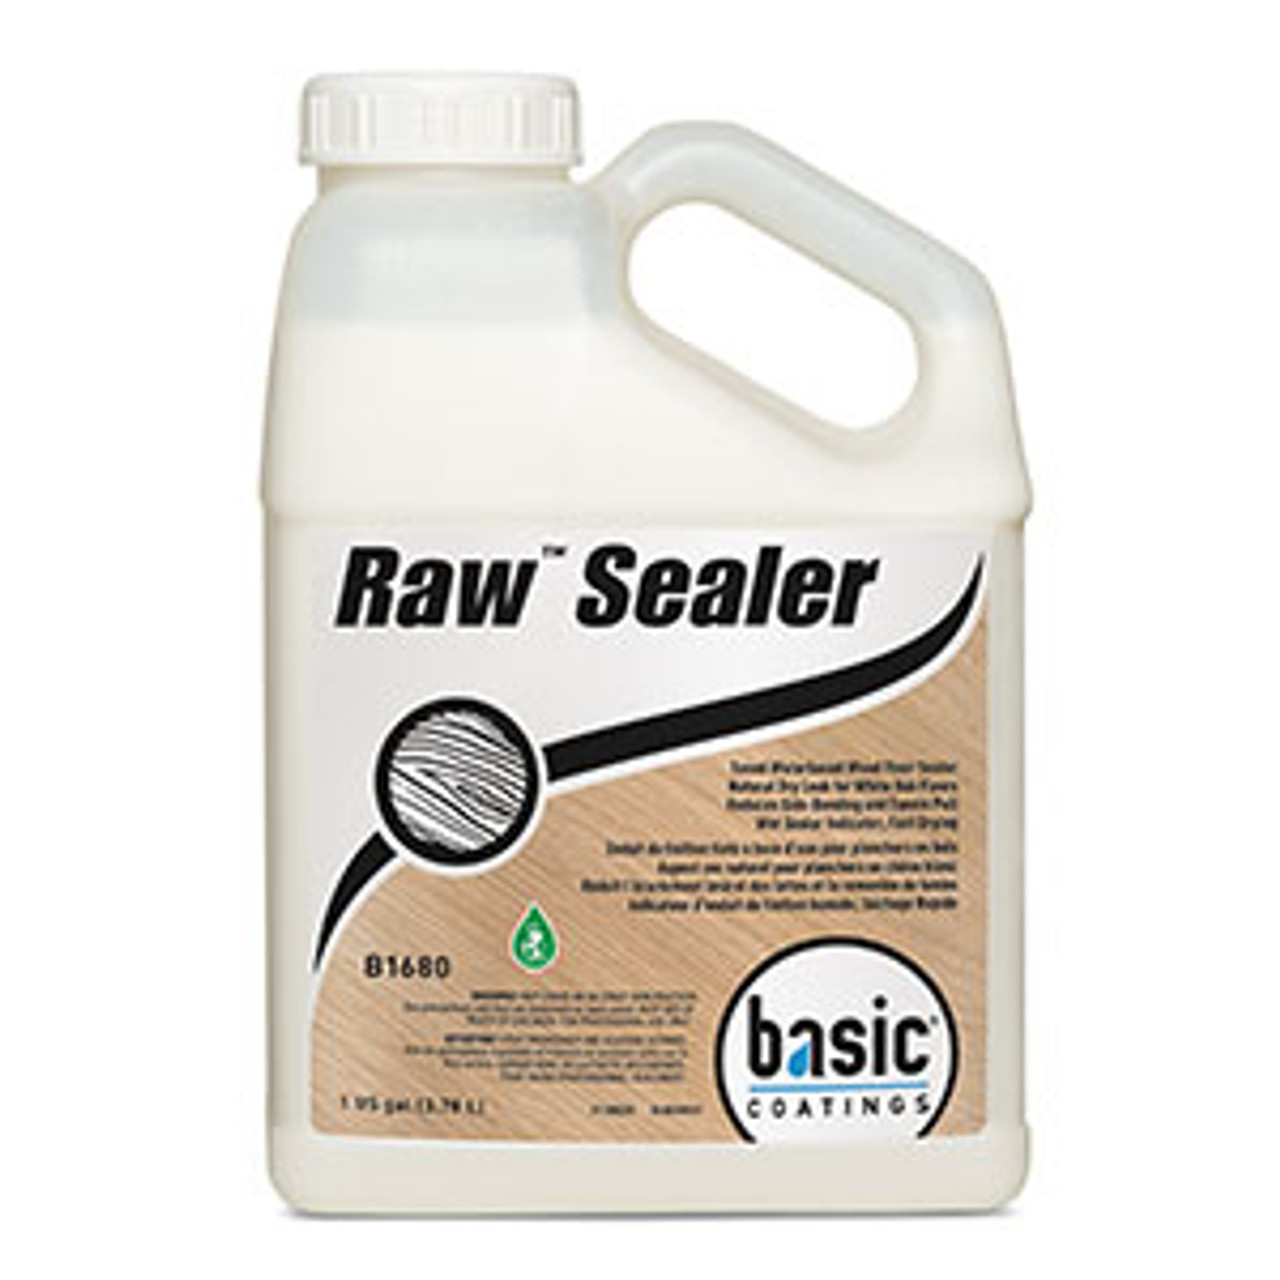 Basic Coatings Raw Sealer - 1 Gallon